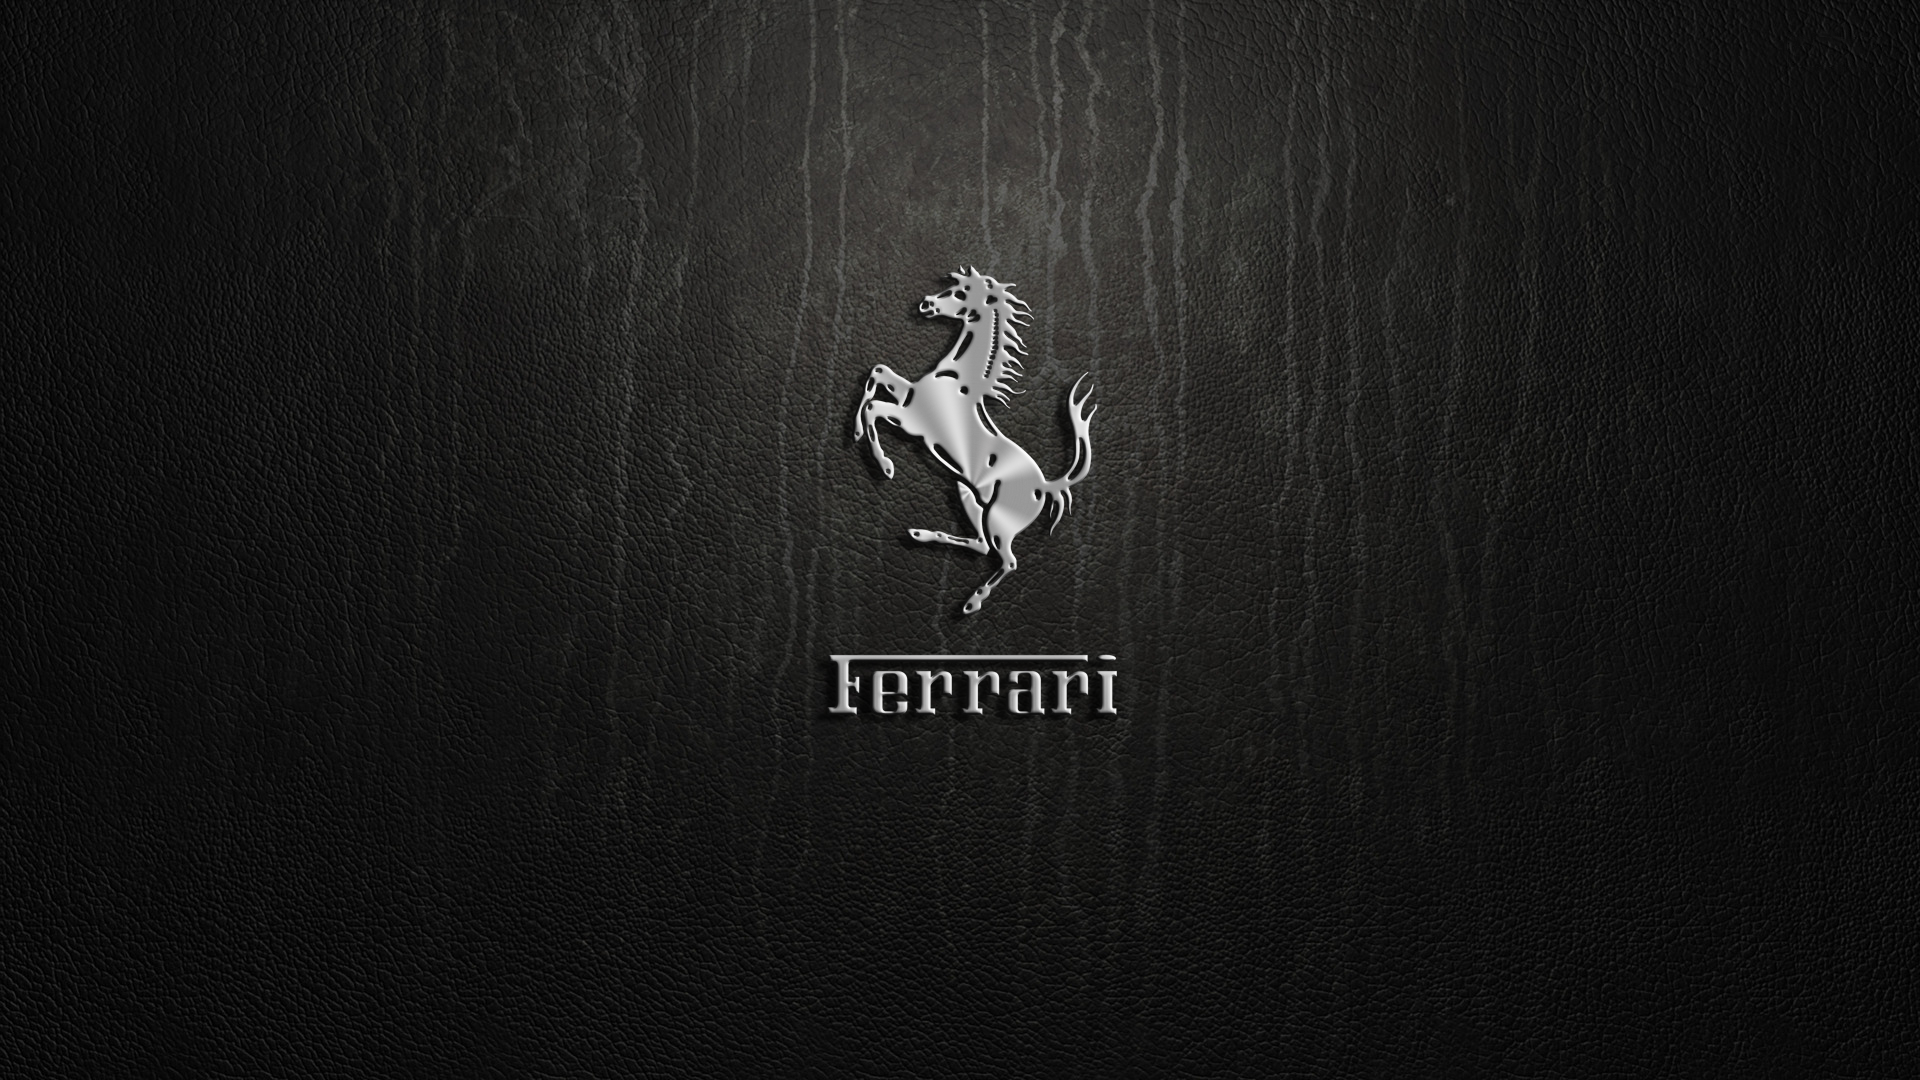 Логотип Ferrari, черный фон